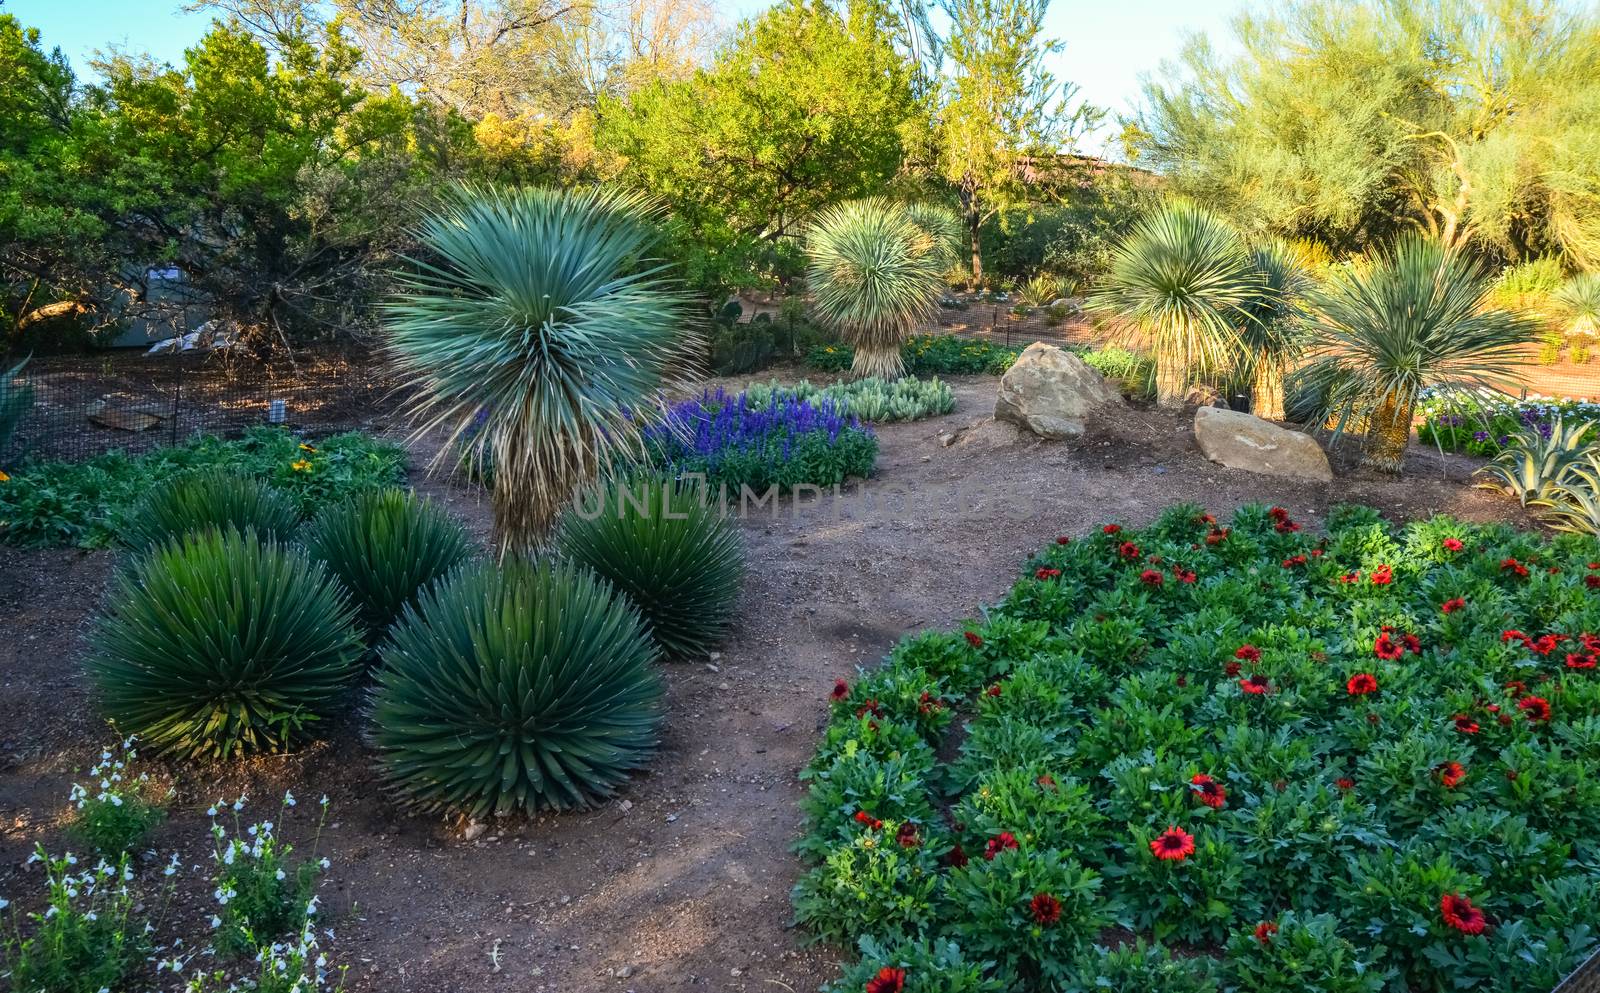 USA, PHENIX, ARIZONA- NOVEMBER 17, 2019:  A group of succulent plants of Echinocactus cacti in the Phoenix Botanical Garden, Arizona, USA